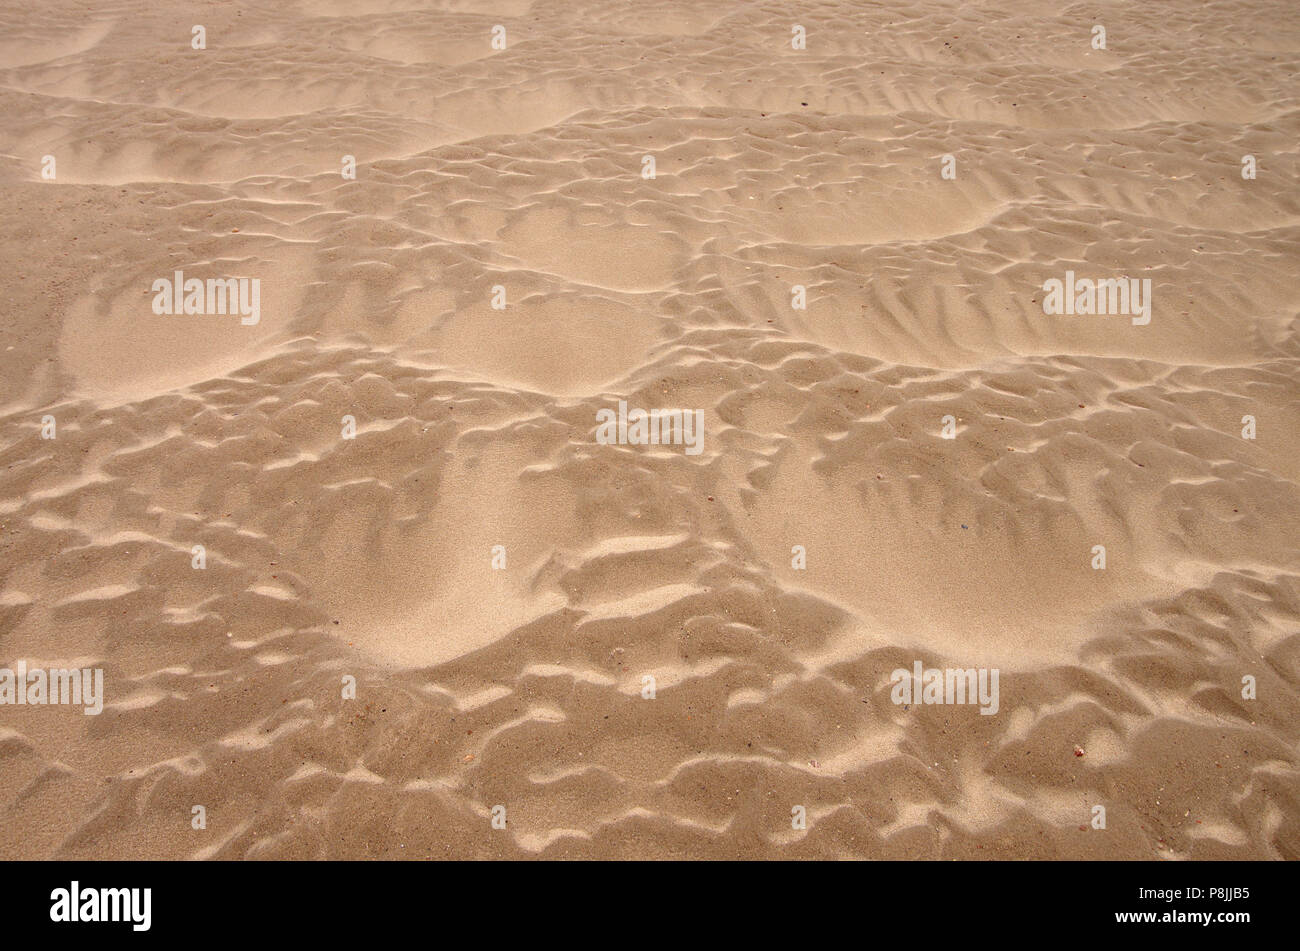 Sand patterns on the beach Stock Photo